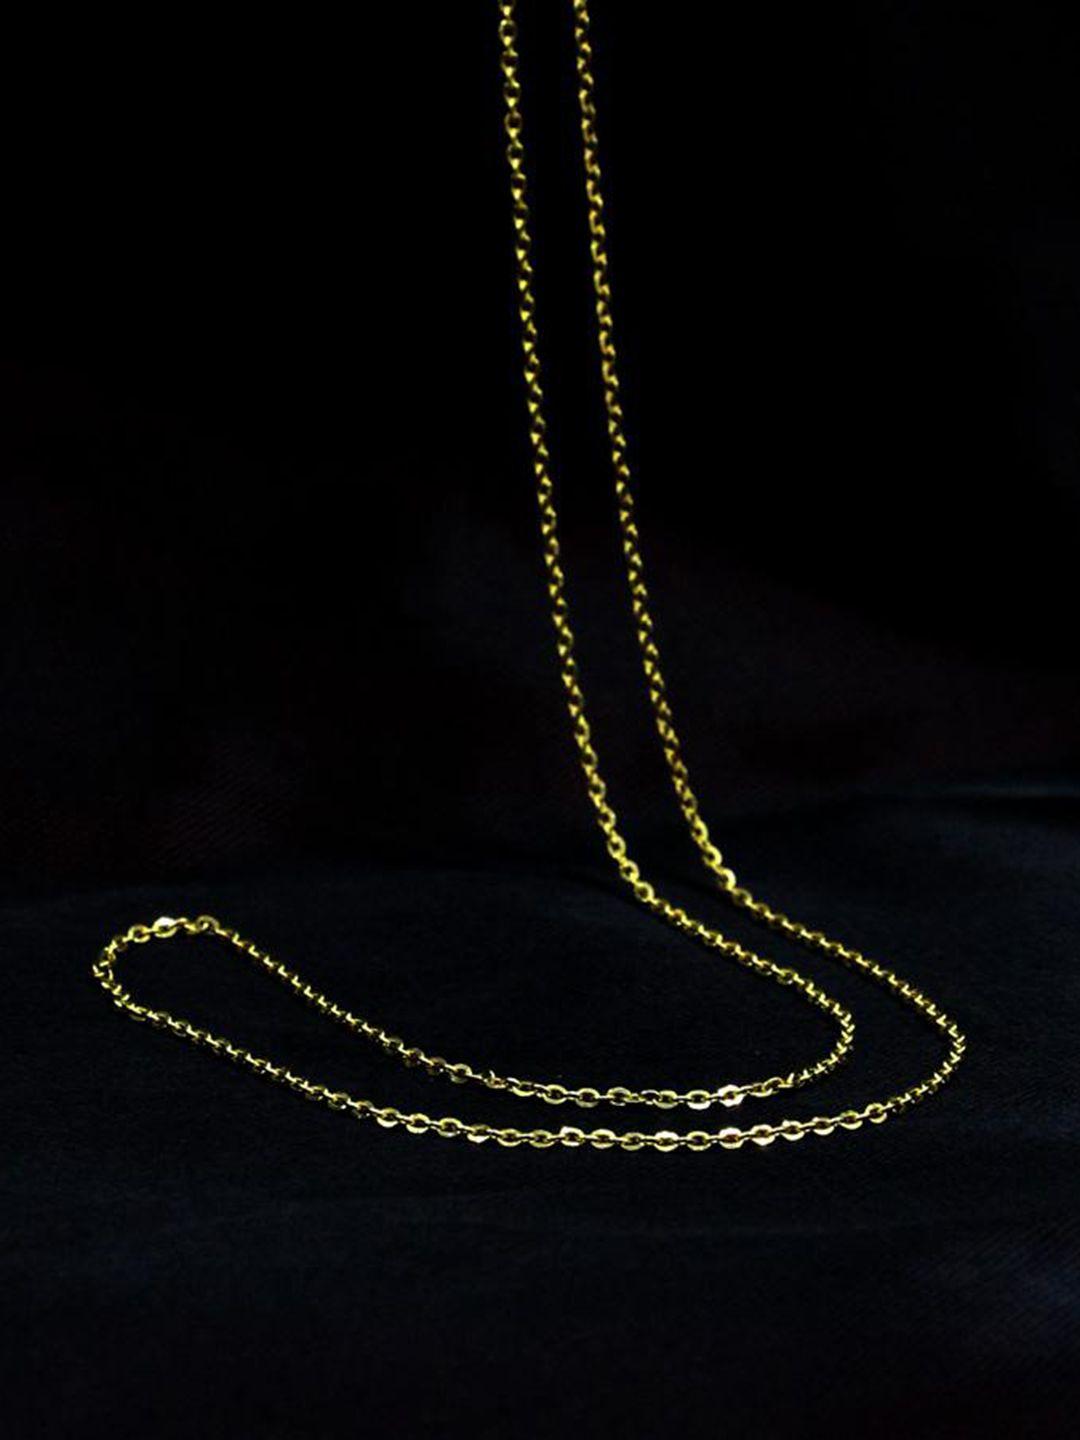 candere a kalyan jewellers company 22kt bis hallmark gold chain-3.26gm